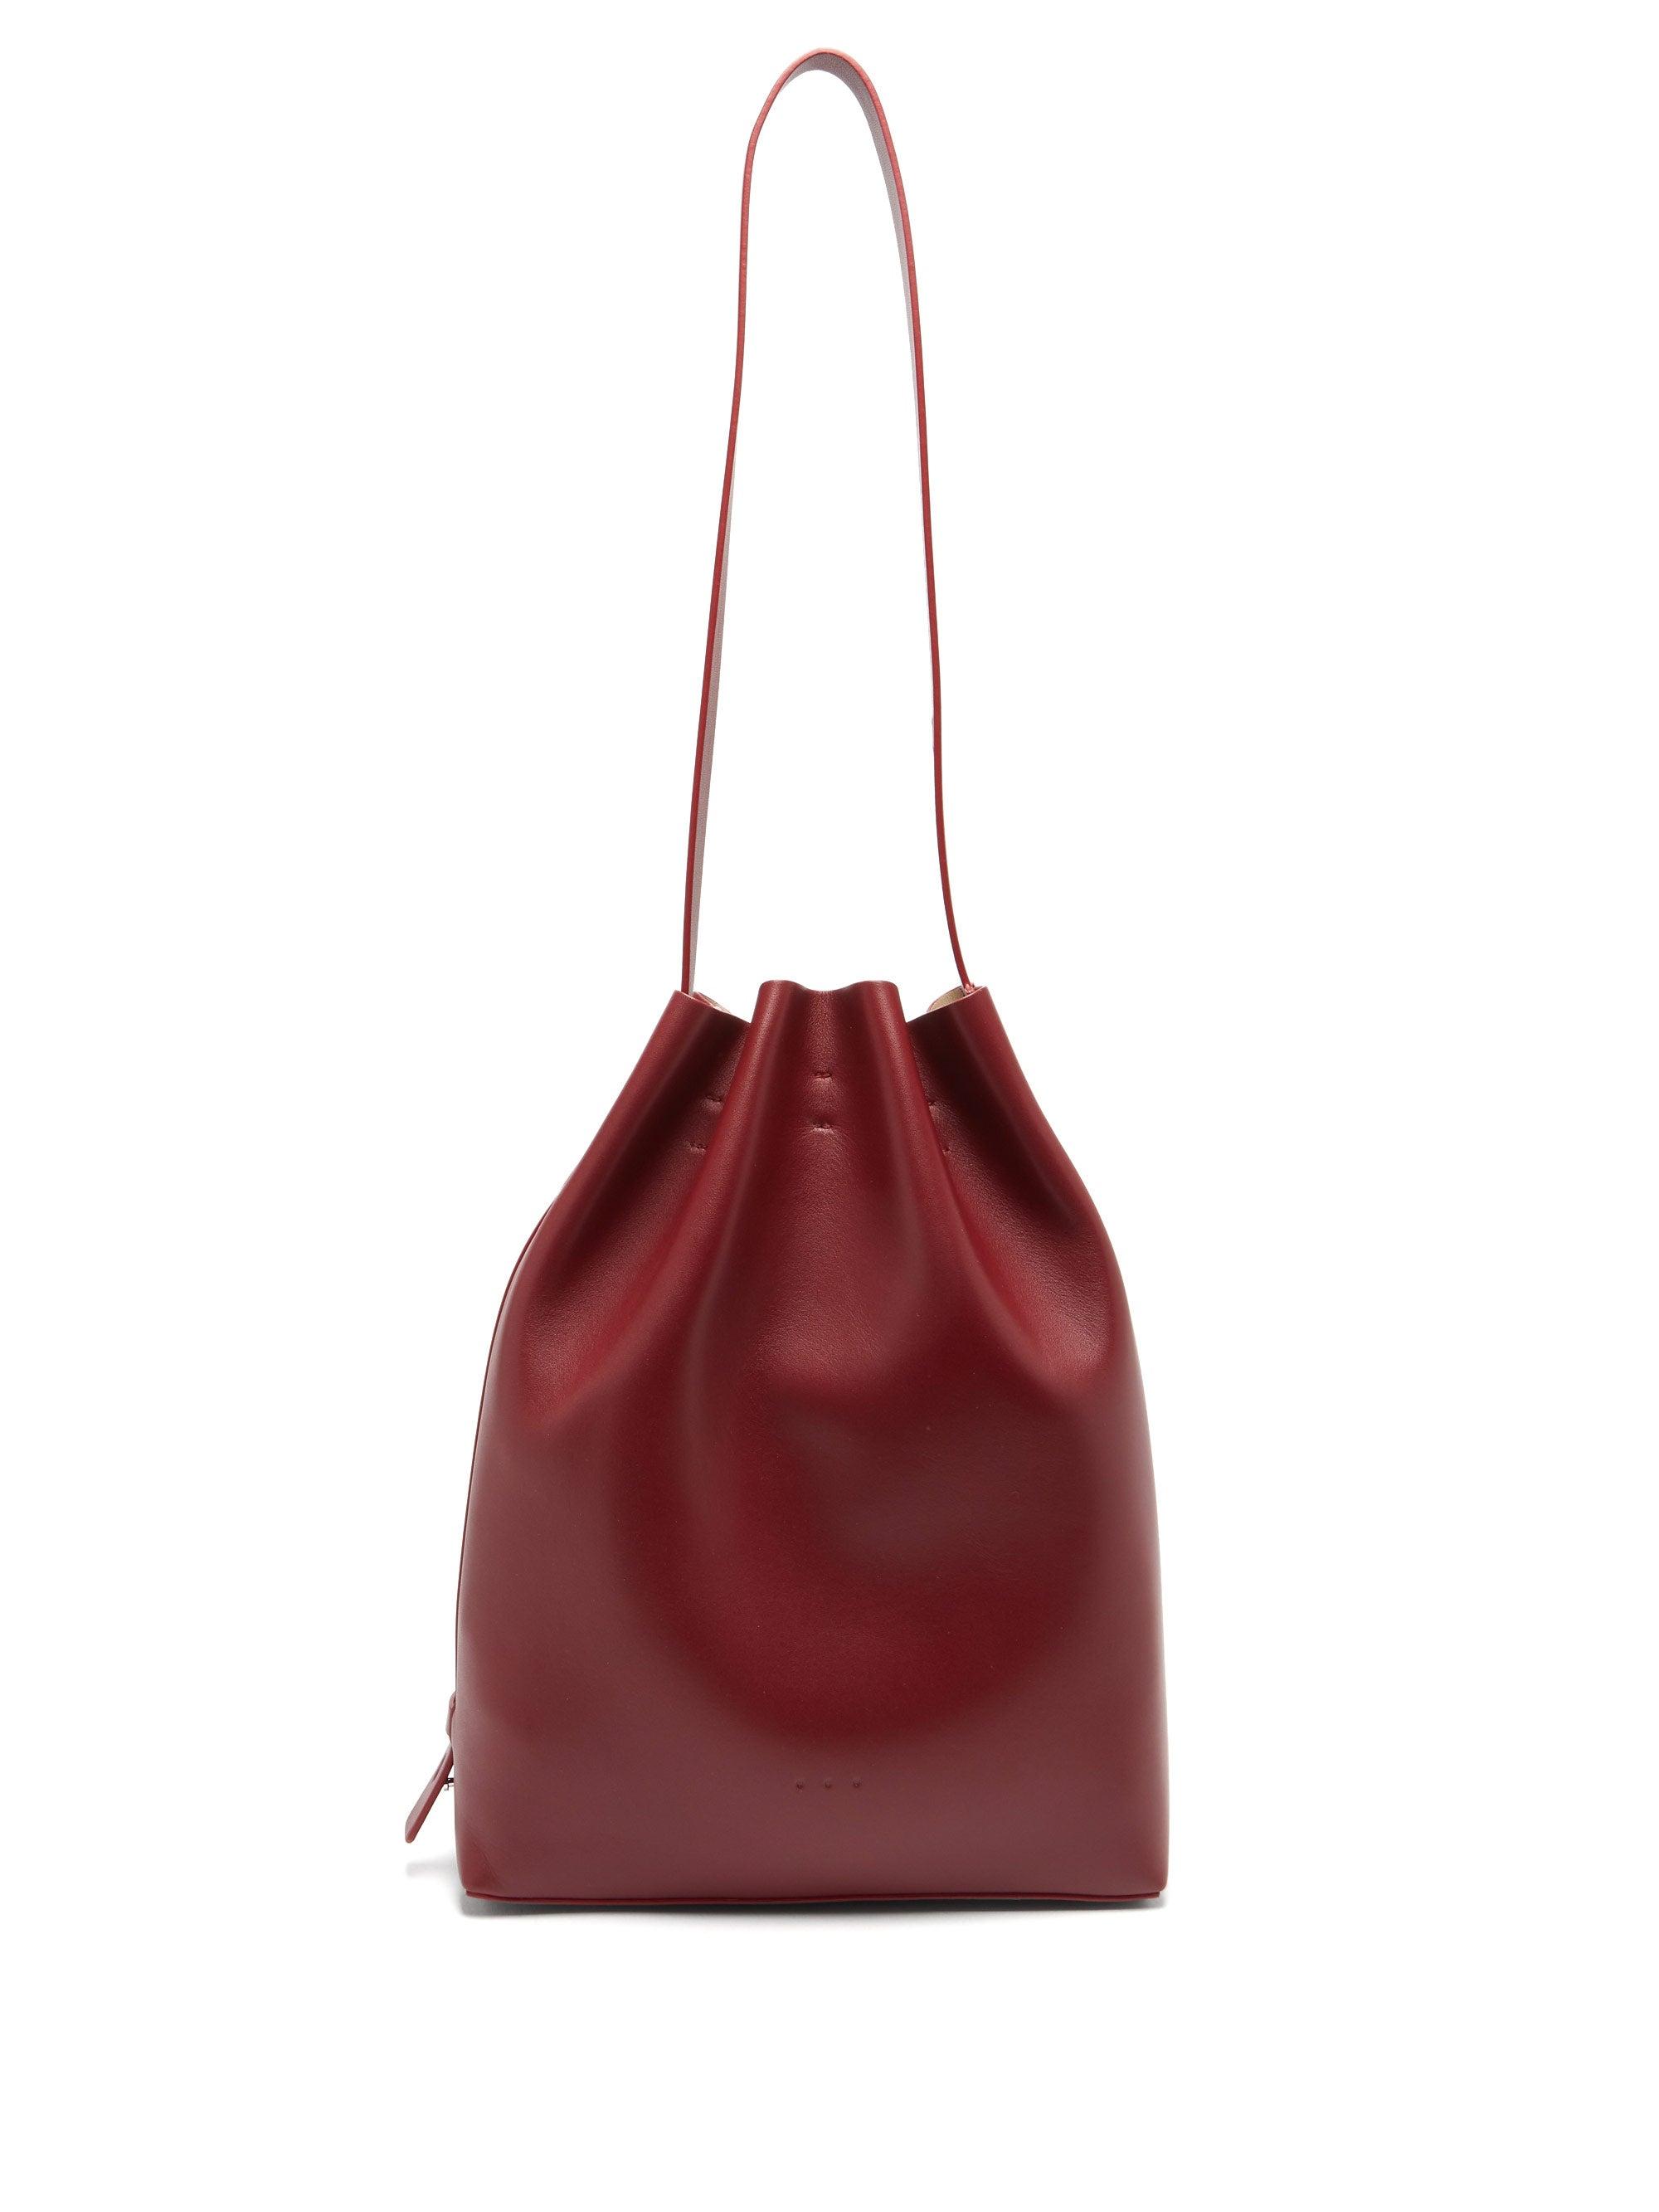 Aesther Ekme Lambskin Leather Bag Women's Red/Orange Tote Bag